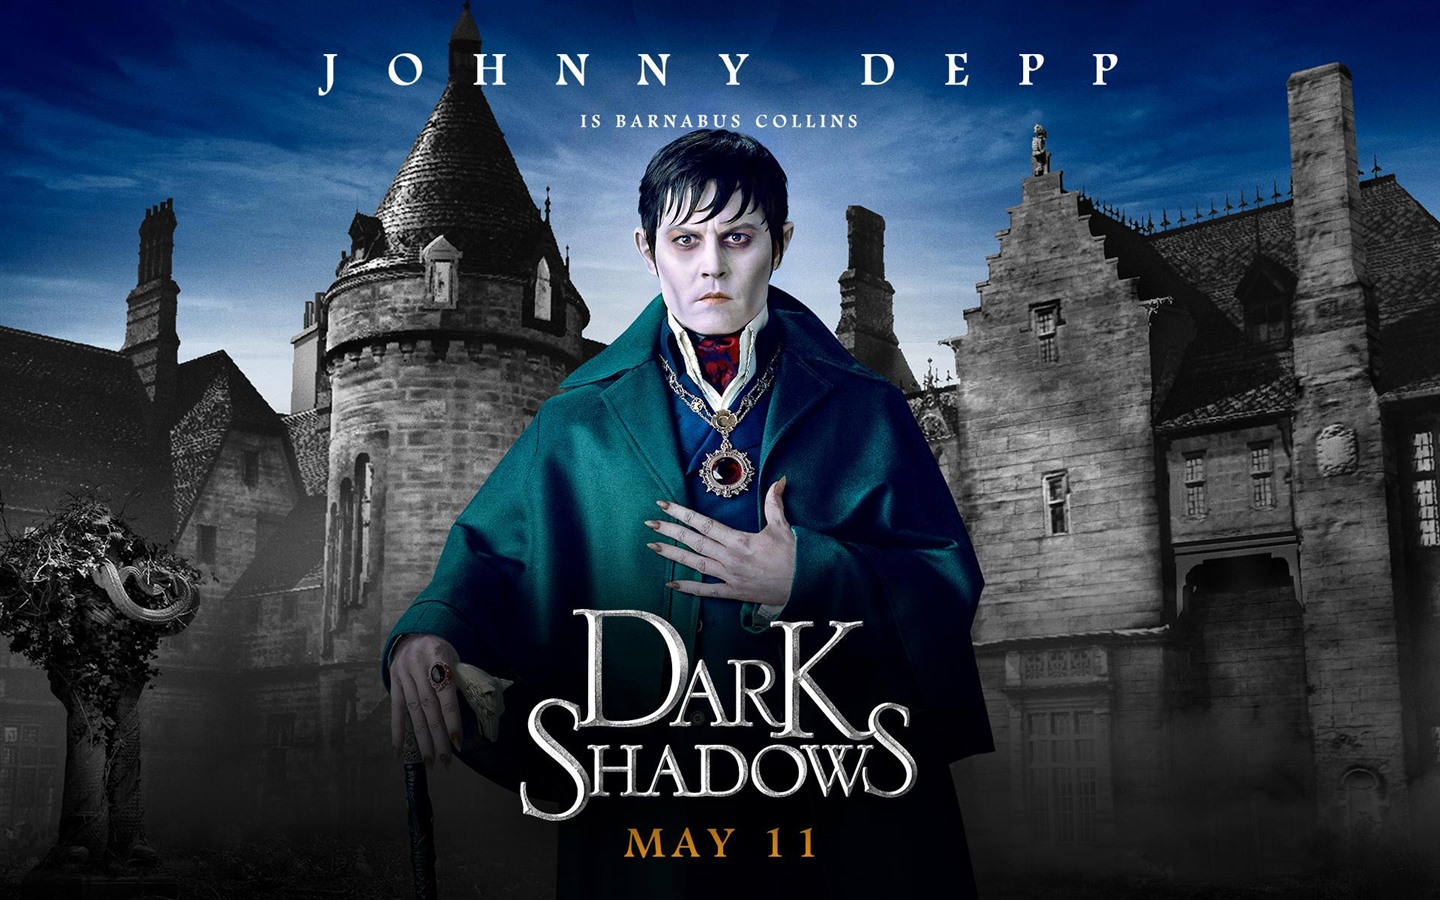 Johnny Depp in Dark Shadows movie HD wallpapers - 1440x900